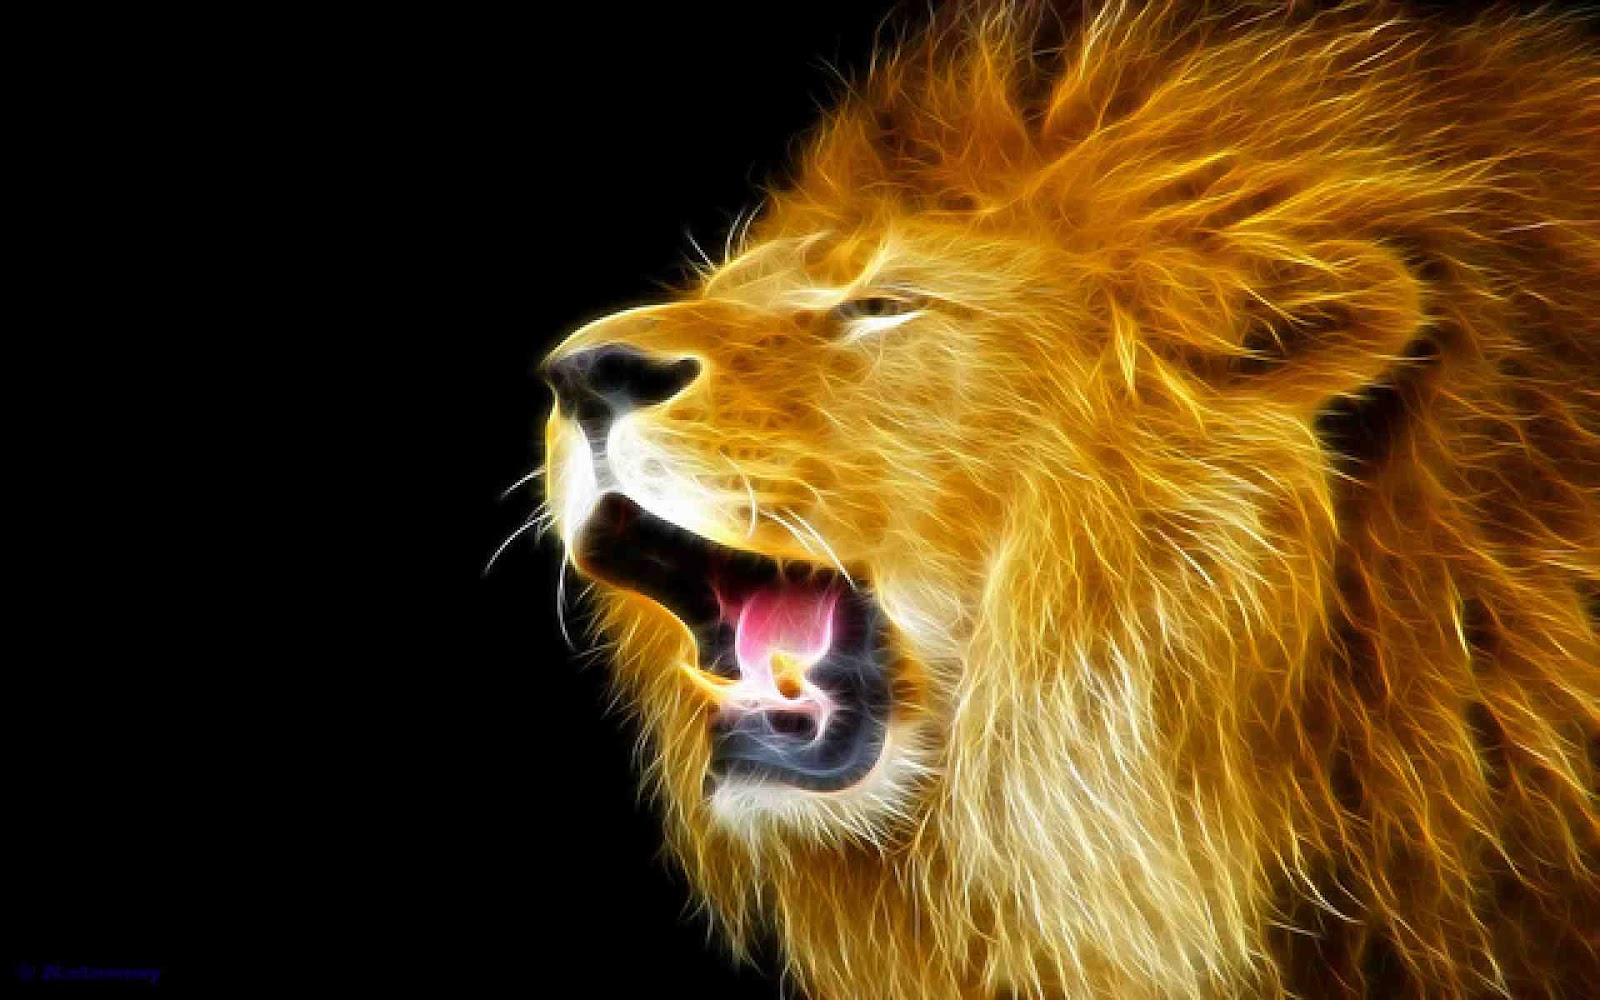 3D Lion Digital Art Wallpaper - Hình Nền 3D Sư Tử Đẹp